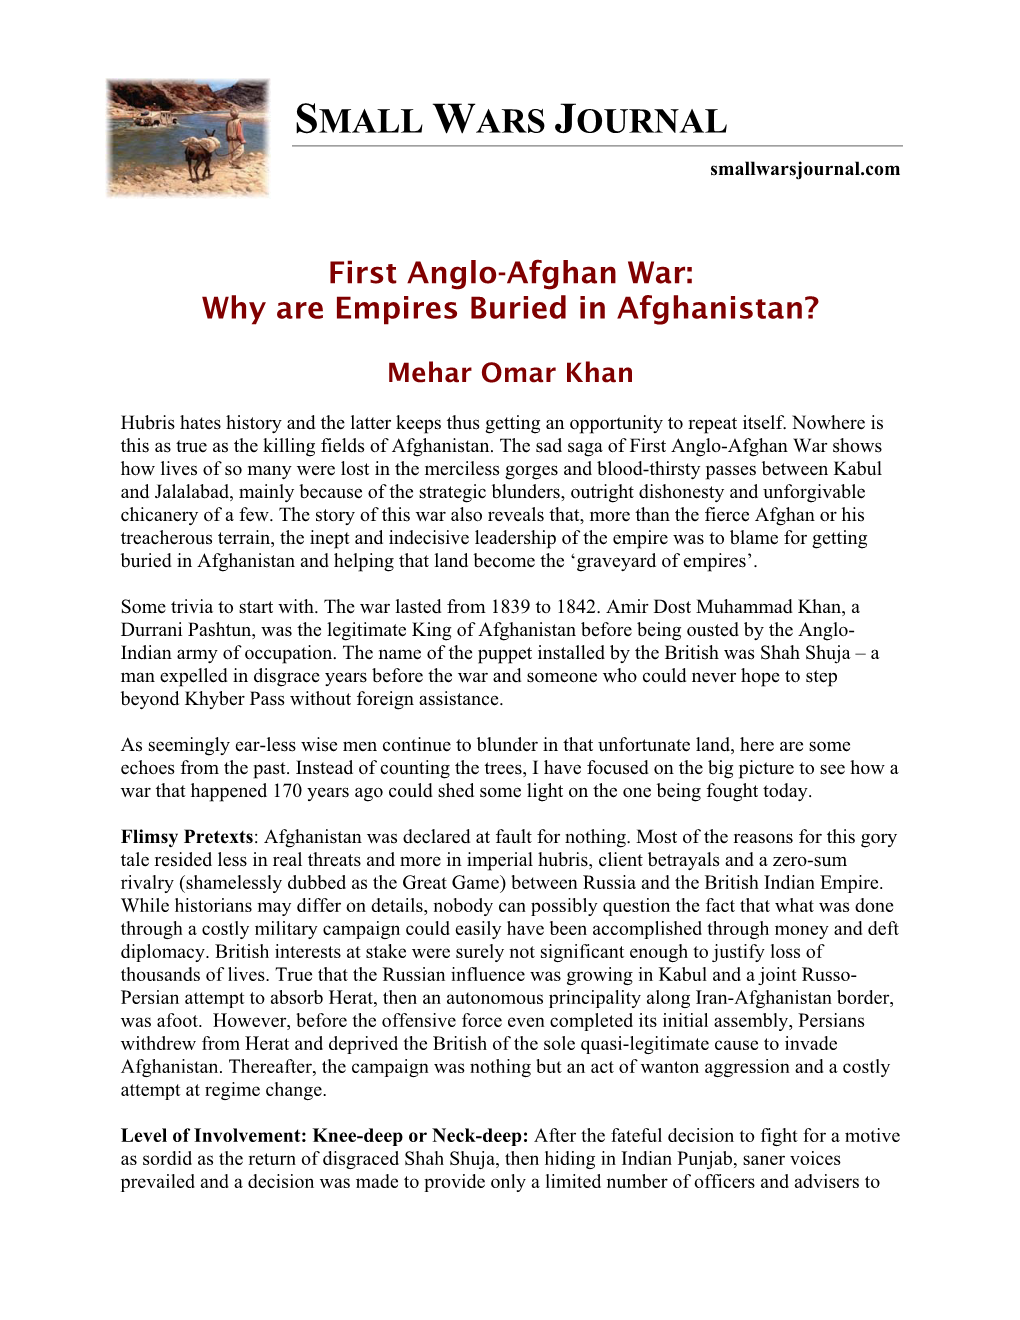 First Anglo and Afghan